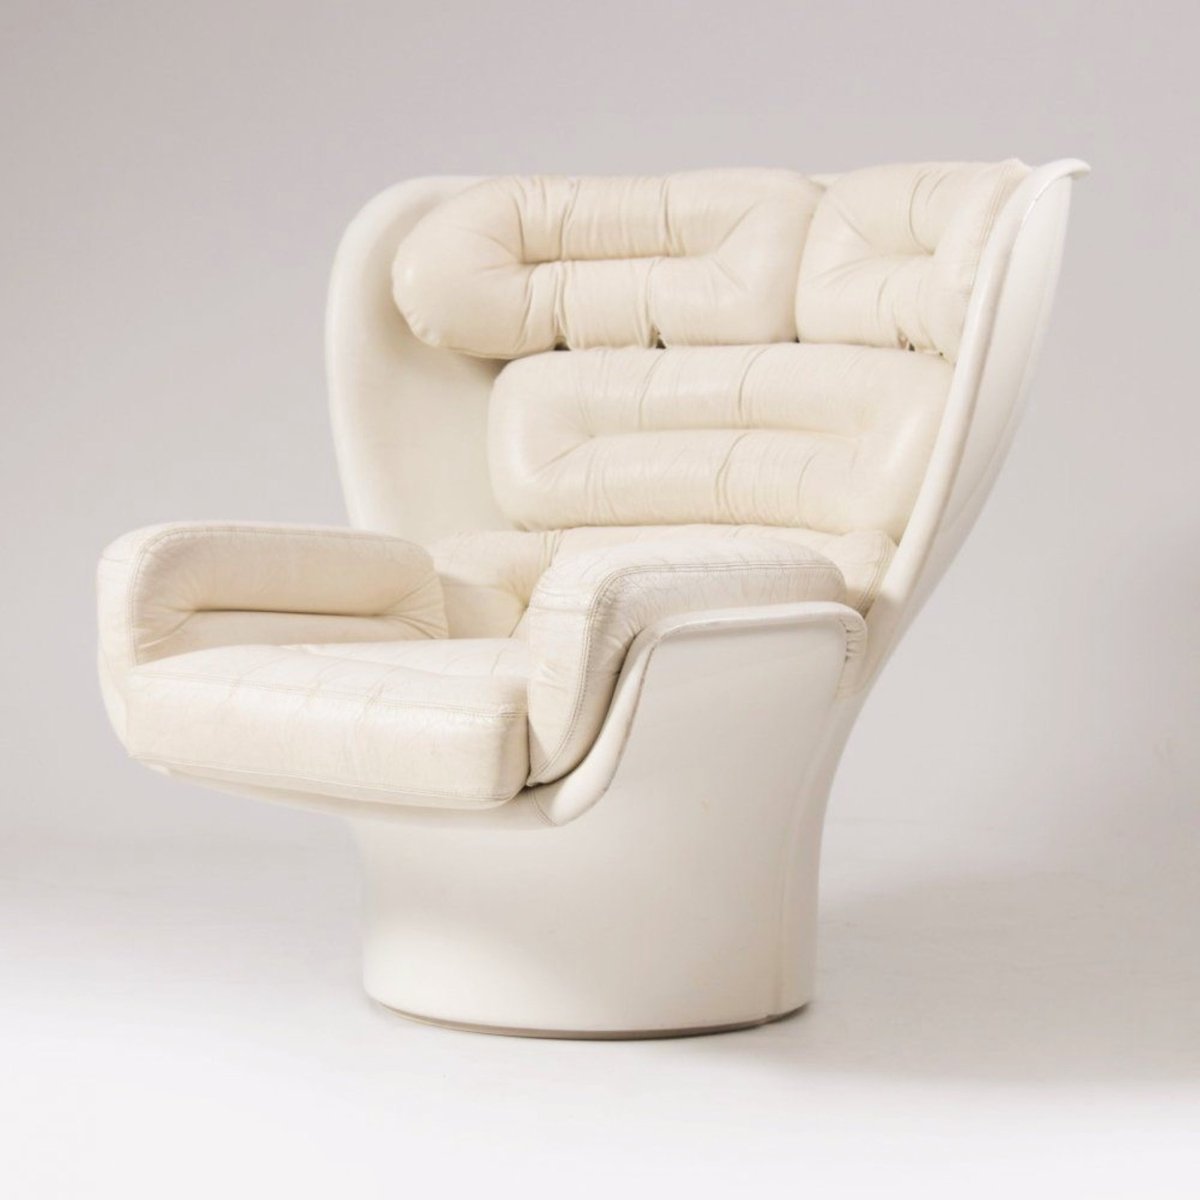 Vintage chairs by Italian designer Joe Colombo